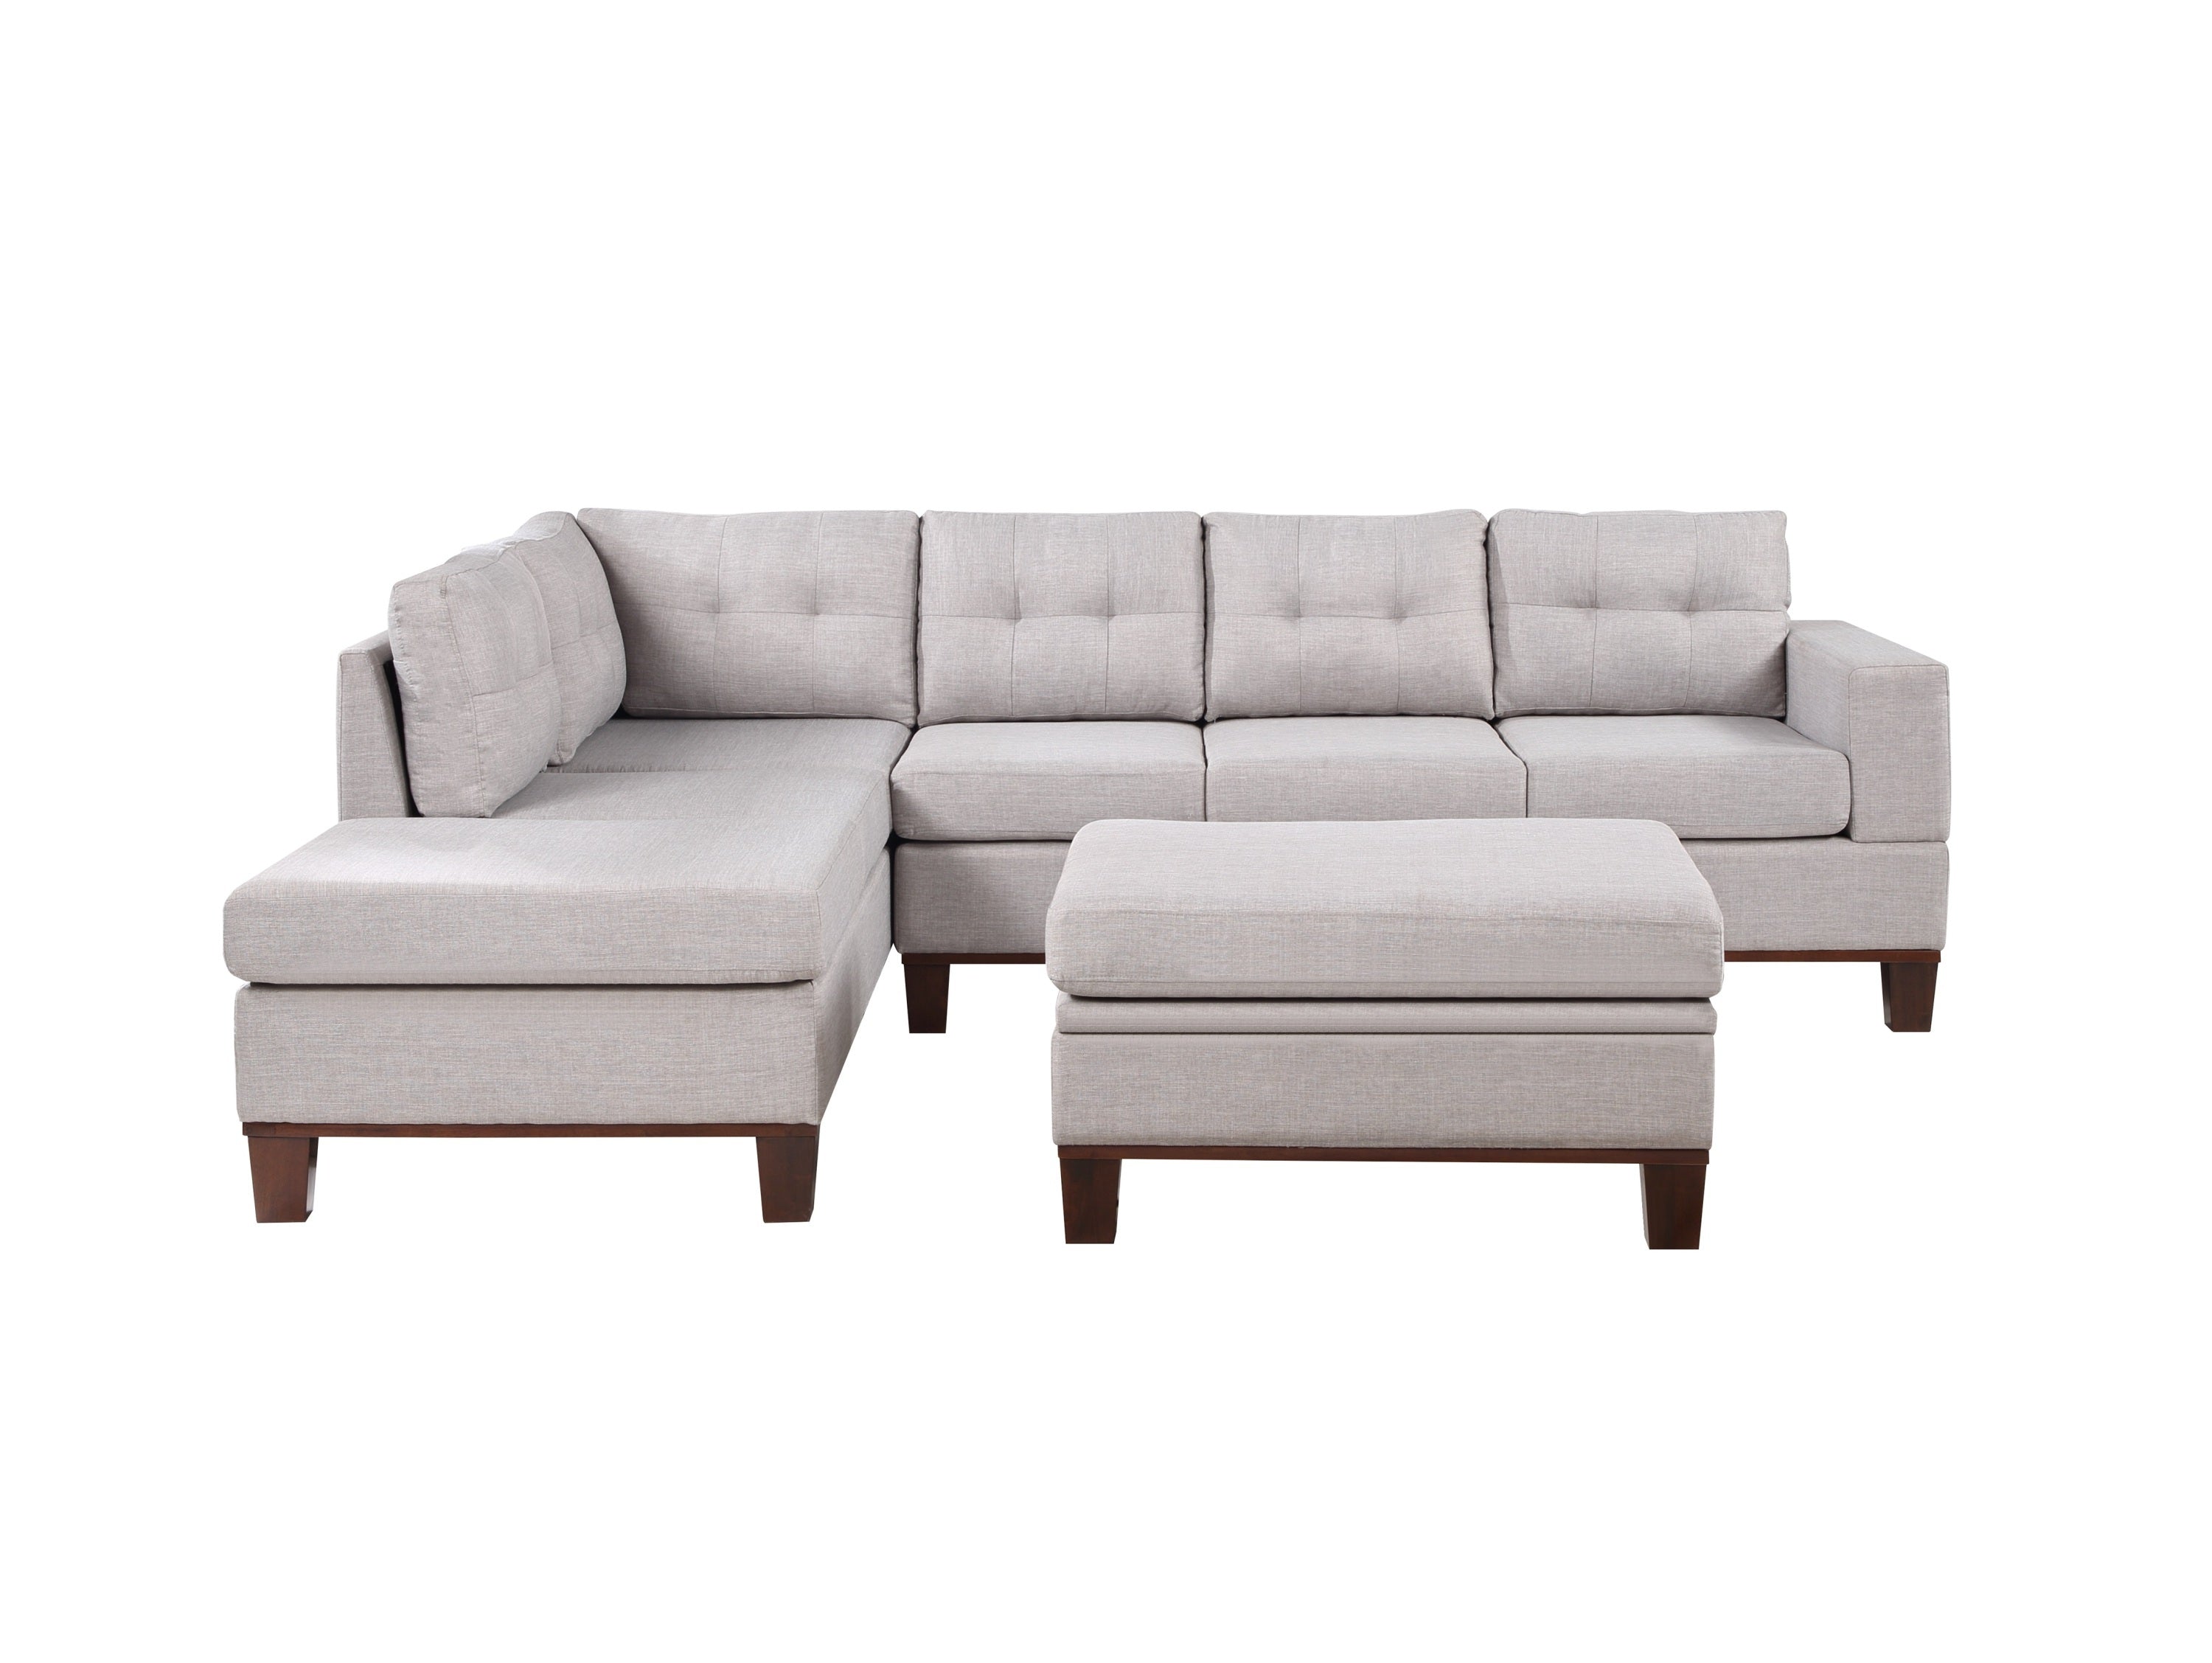 Hilo Light Gray Fabric Reversible Sectional Sofa w/Storage Ottoman